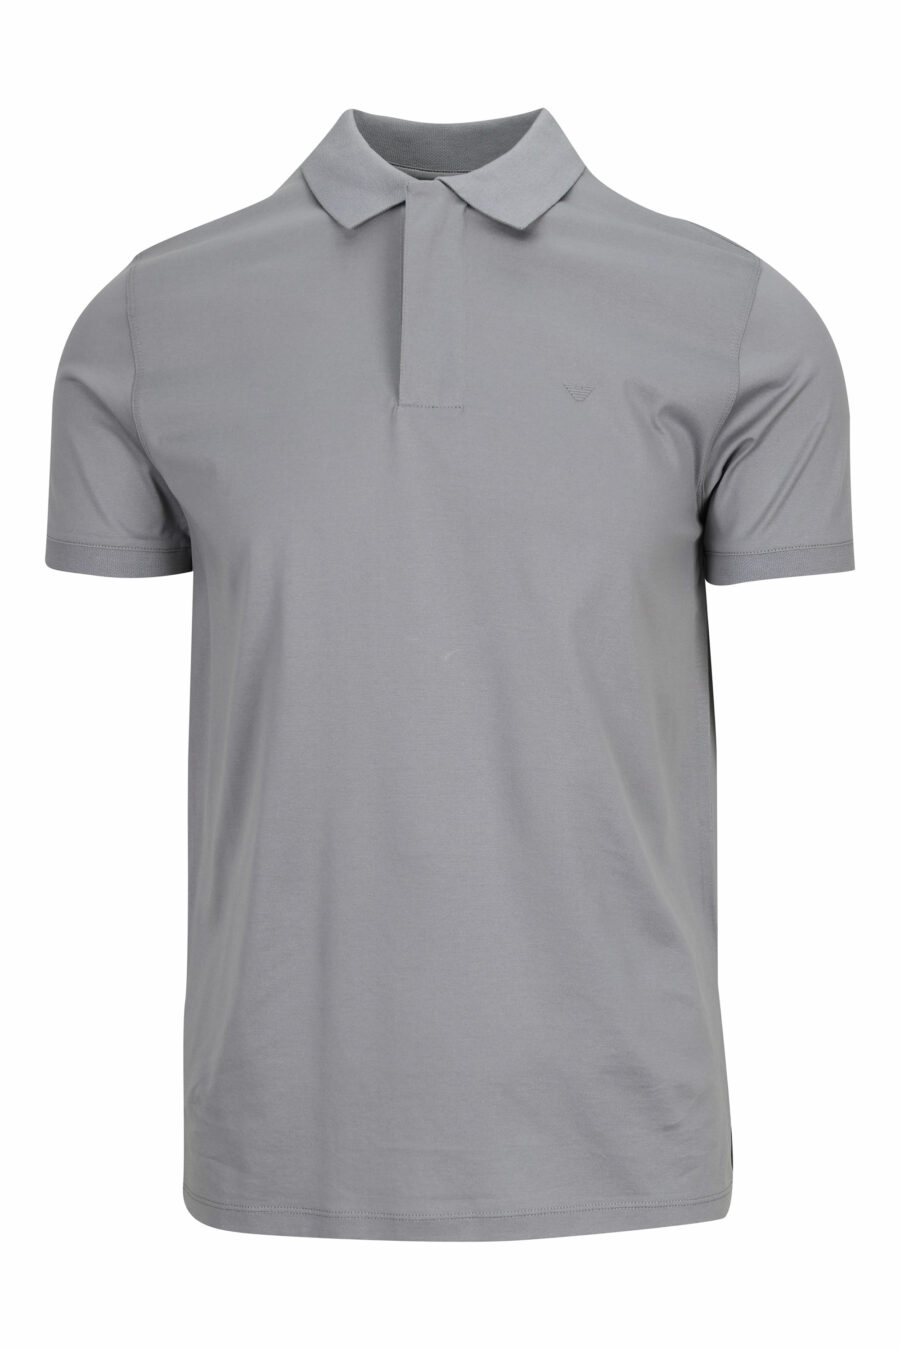 Grey polo shirt with monochrome eagle mini logo - 8058997613835 1